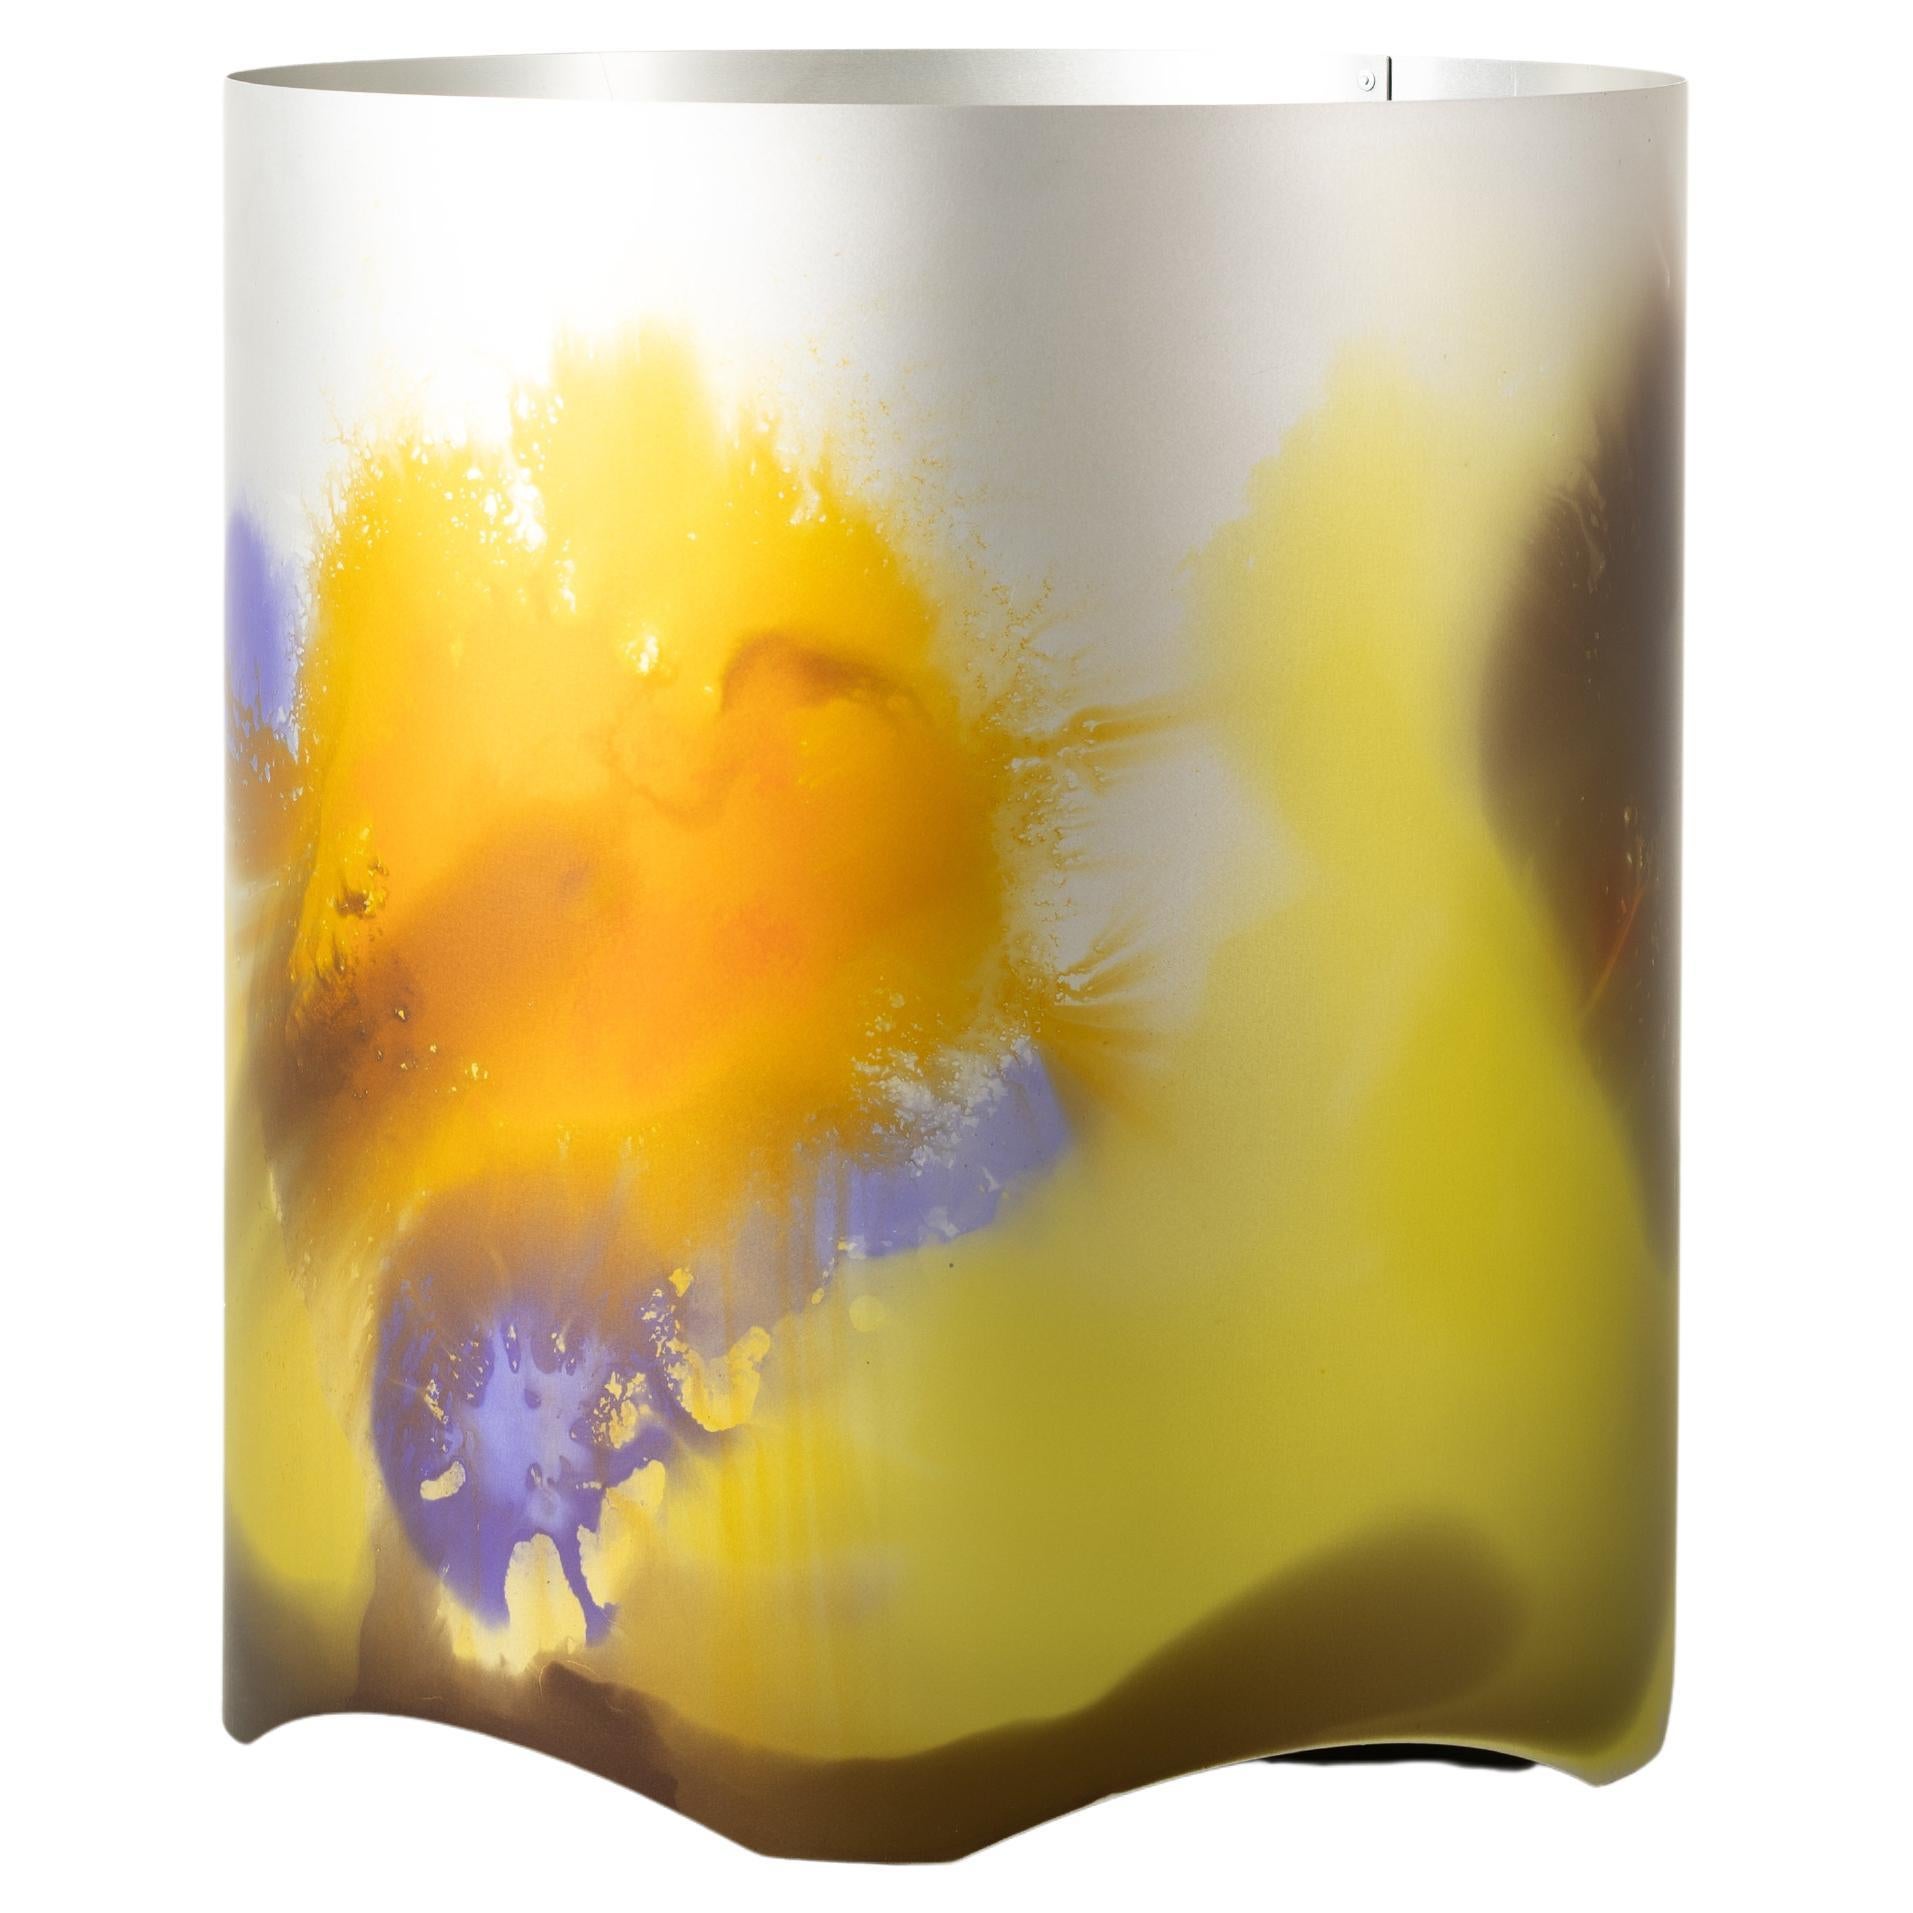 Vase / Jardinière en aluminium anodisé Contemporary Multi-Coloured